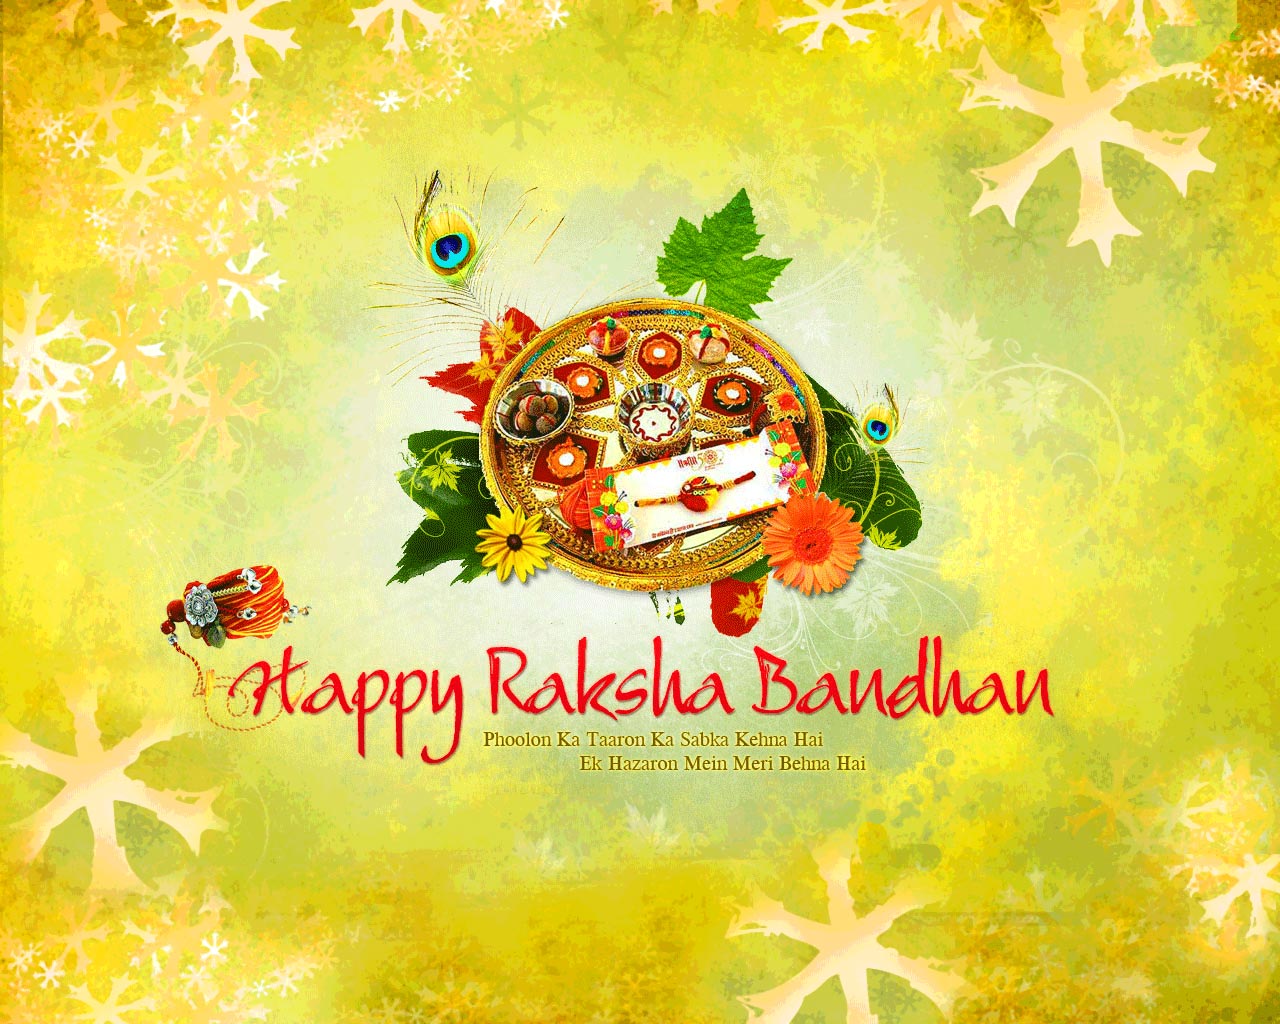 Raksha Bandhan Wallpapers, Images, Photo for Facebook